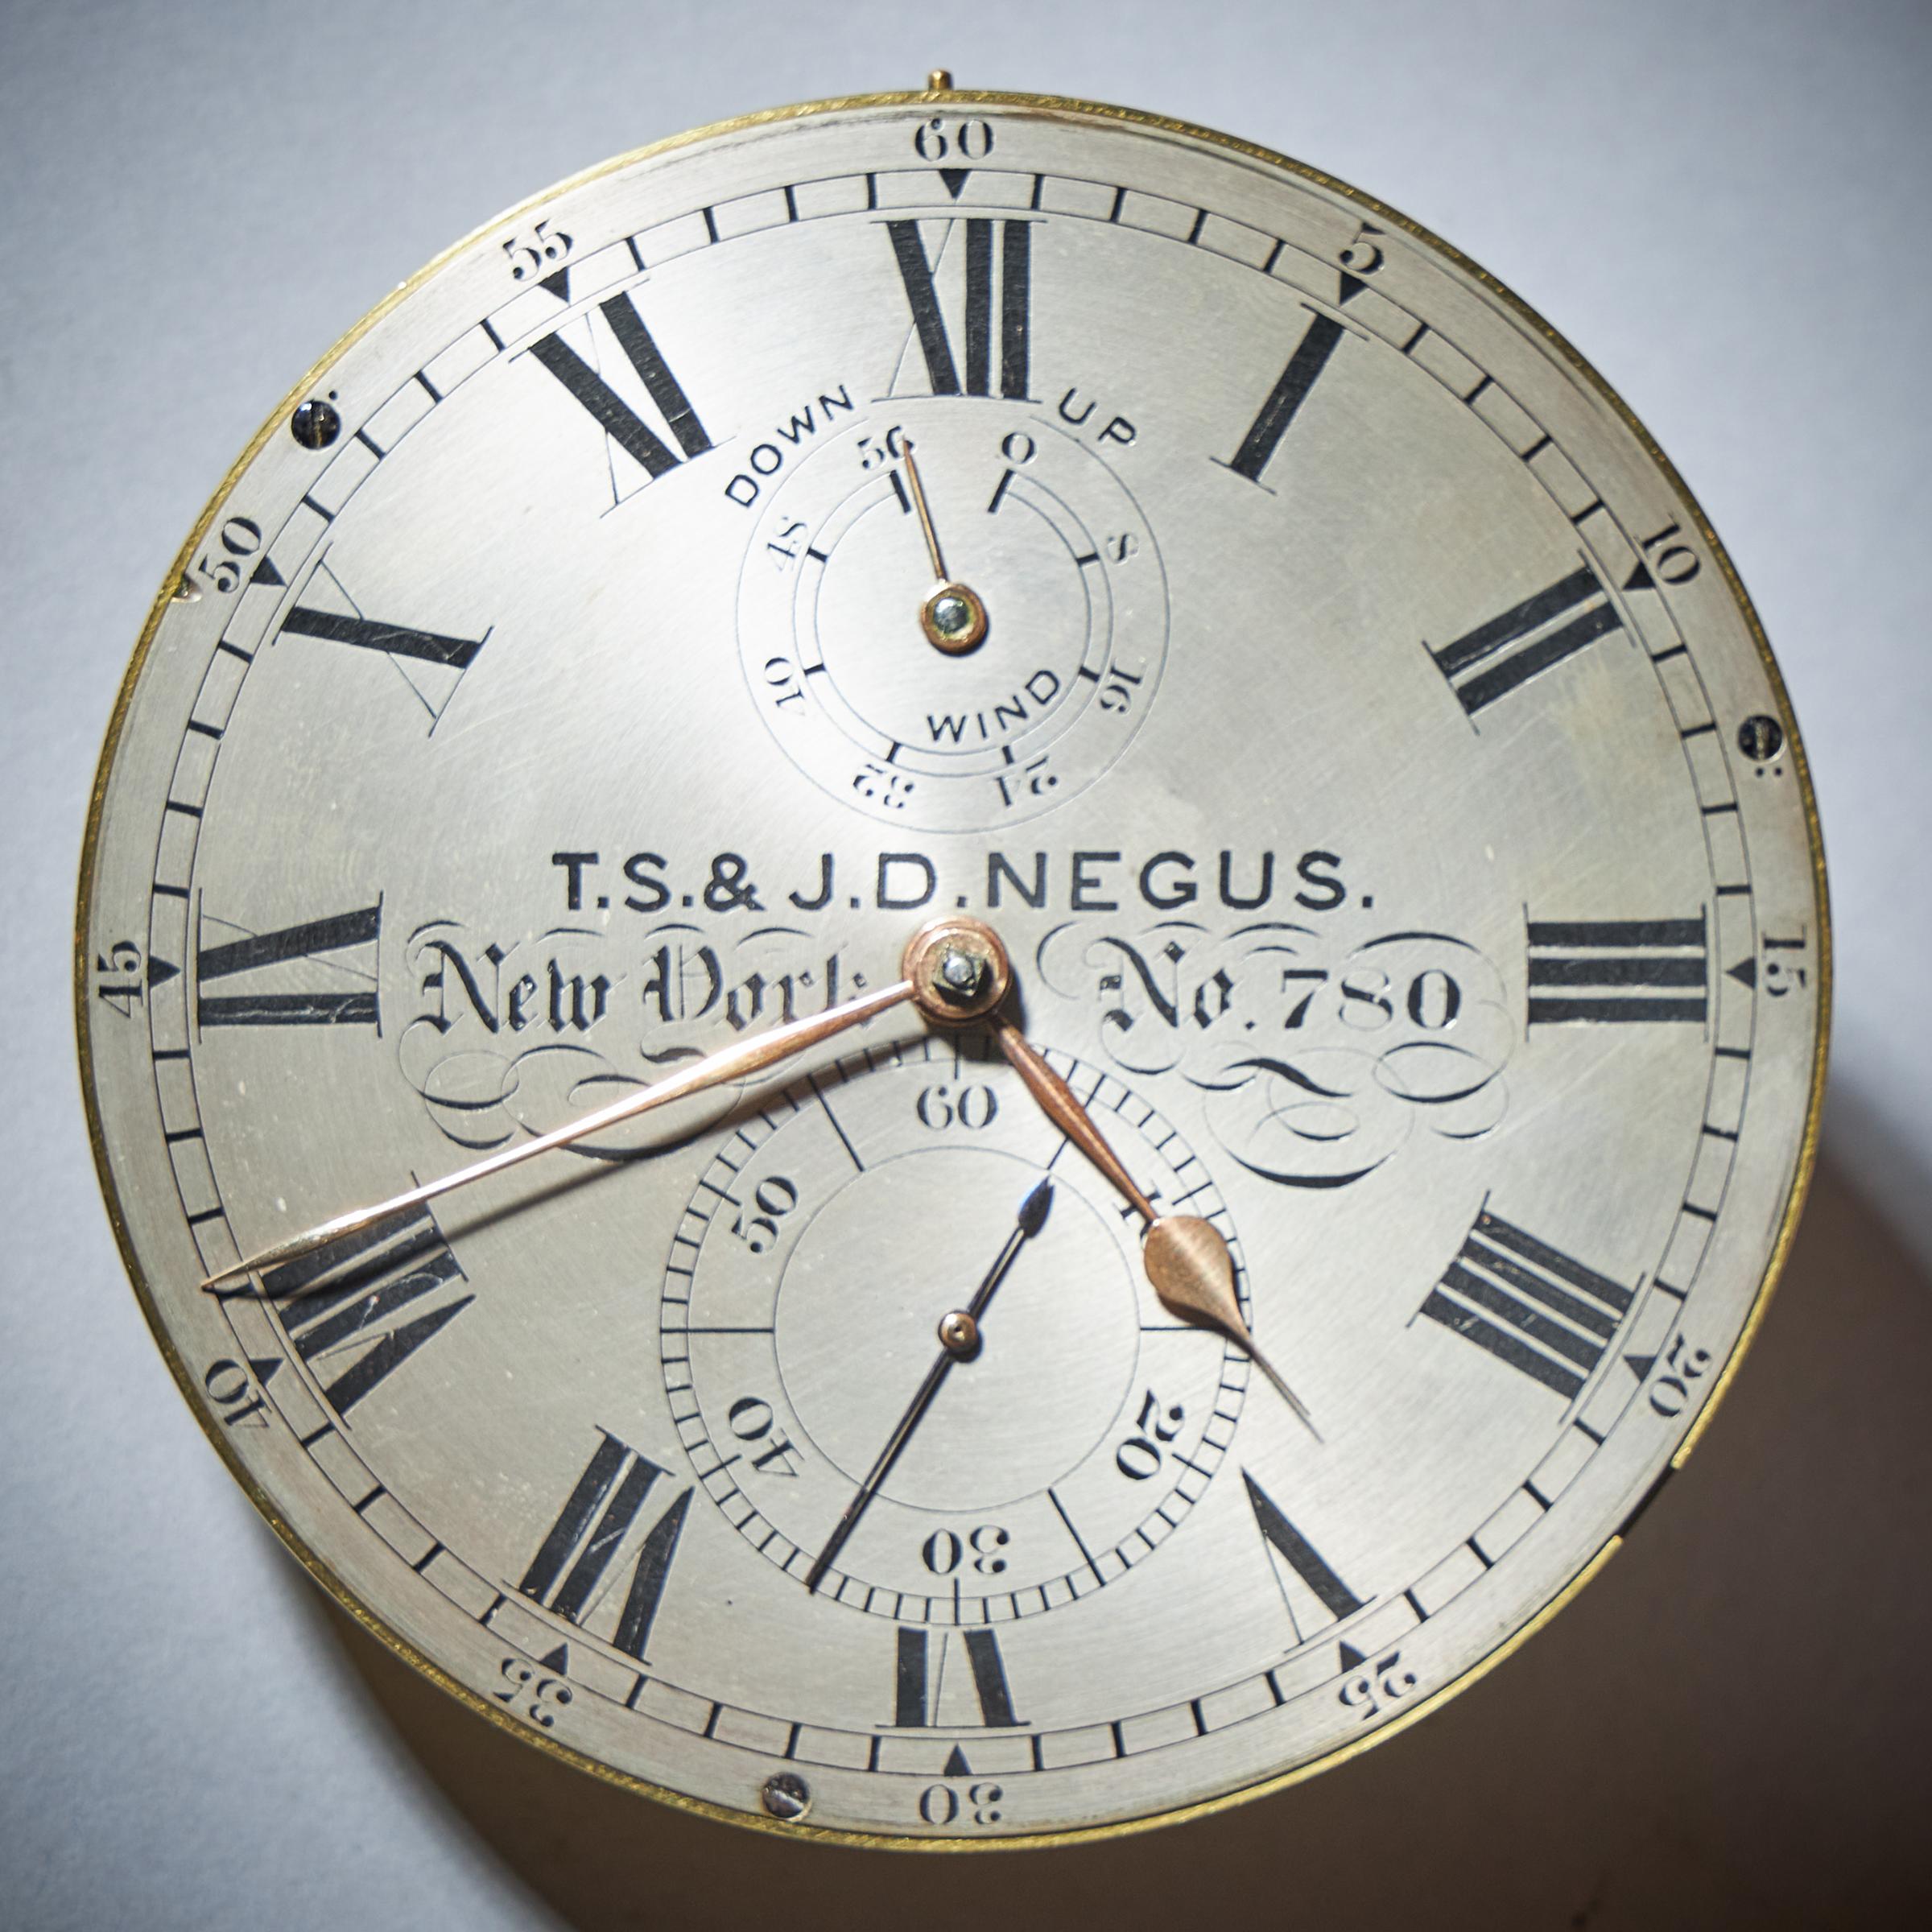 19th Century Fine American Two Day Marine Chronometer, Signed T. S & J. D Negus New York